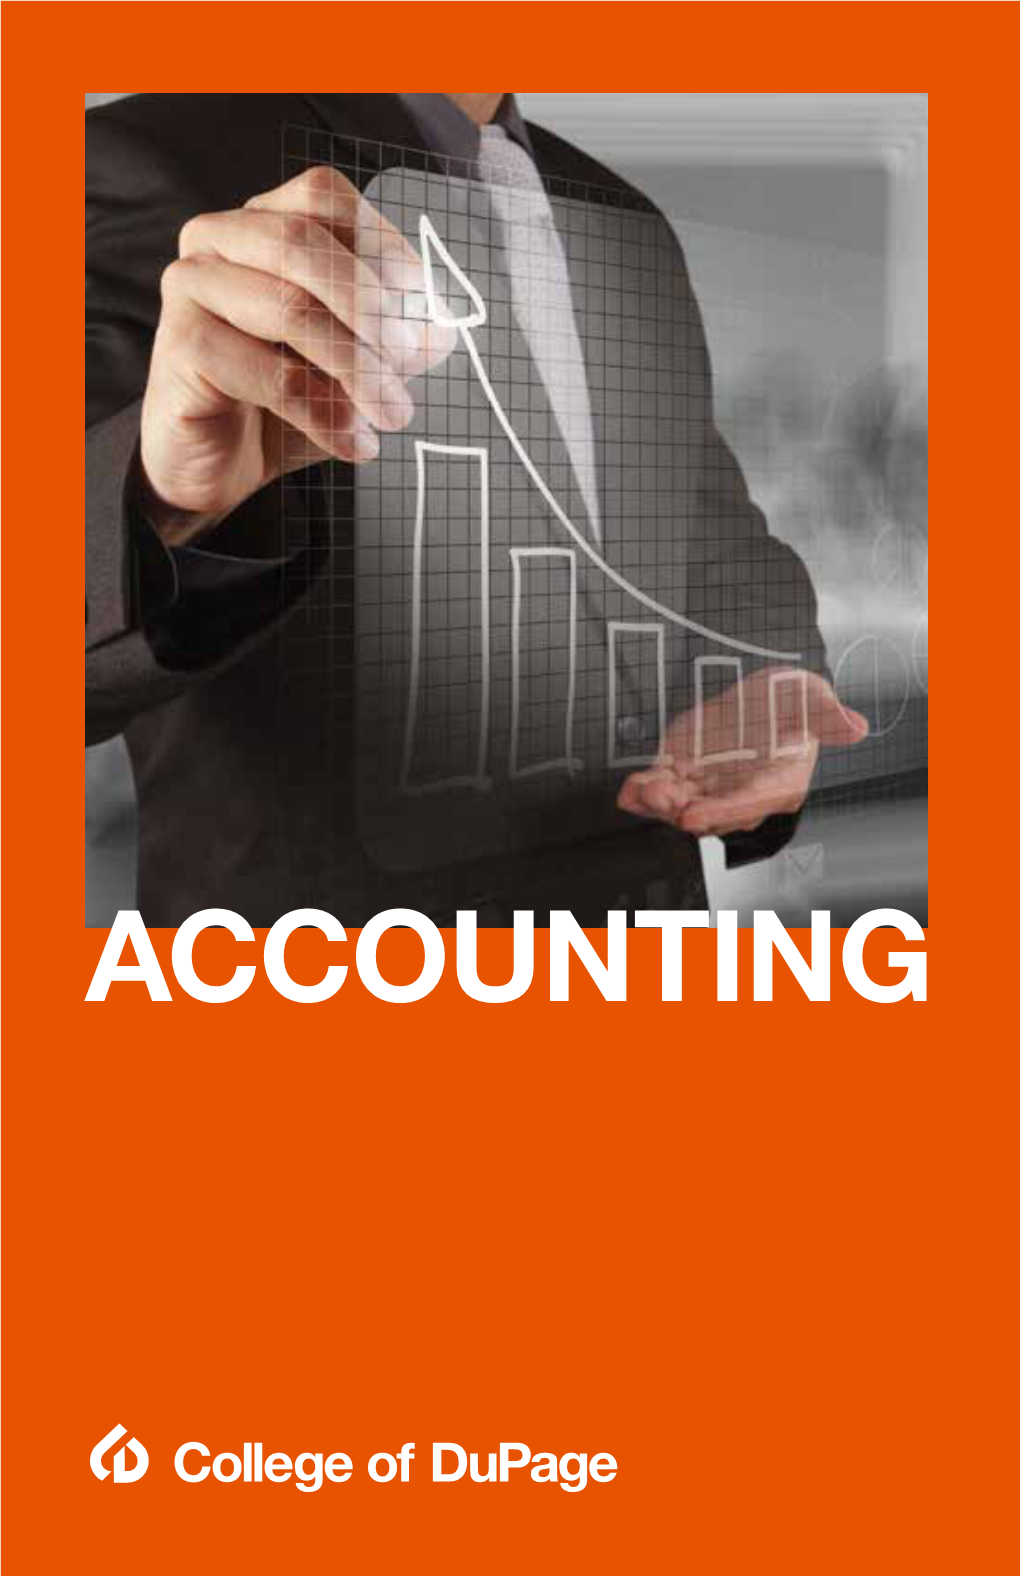 ACCOUNTING ACCOUNTING Accounting Is Considered the Language of Business